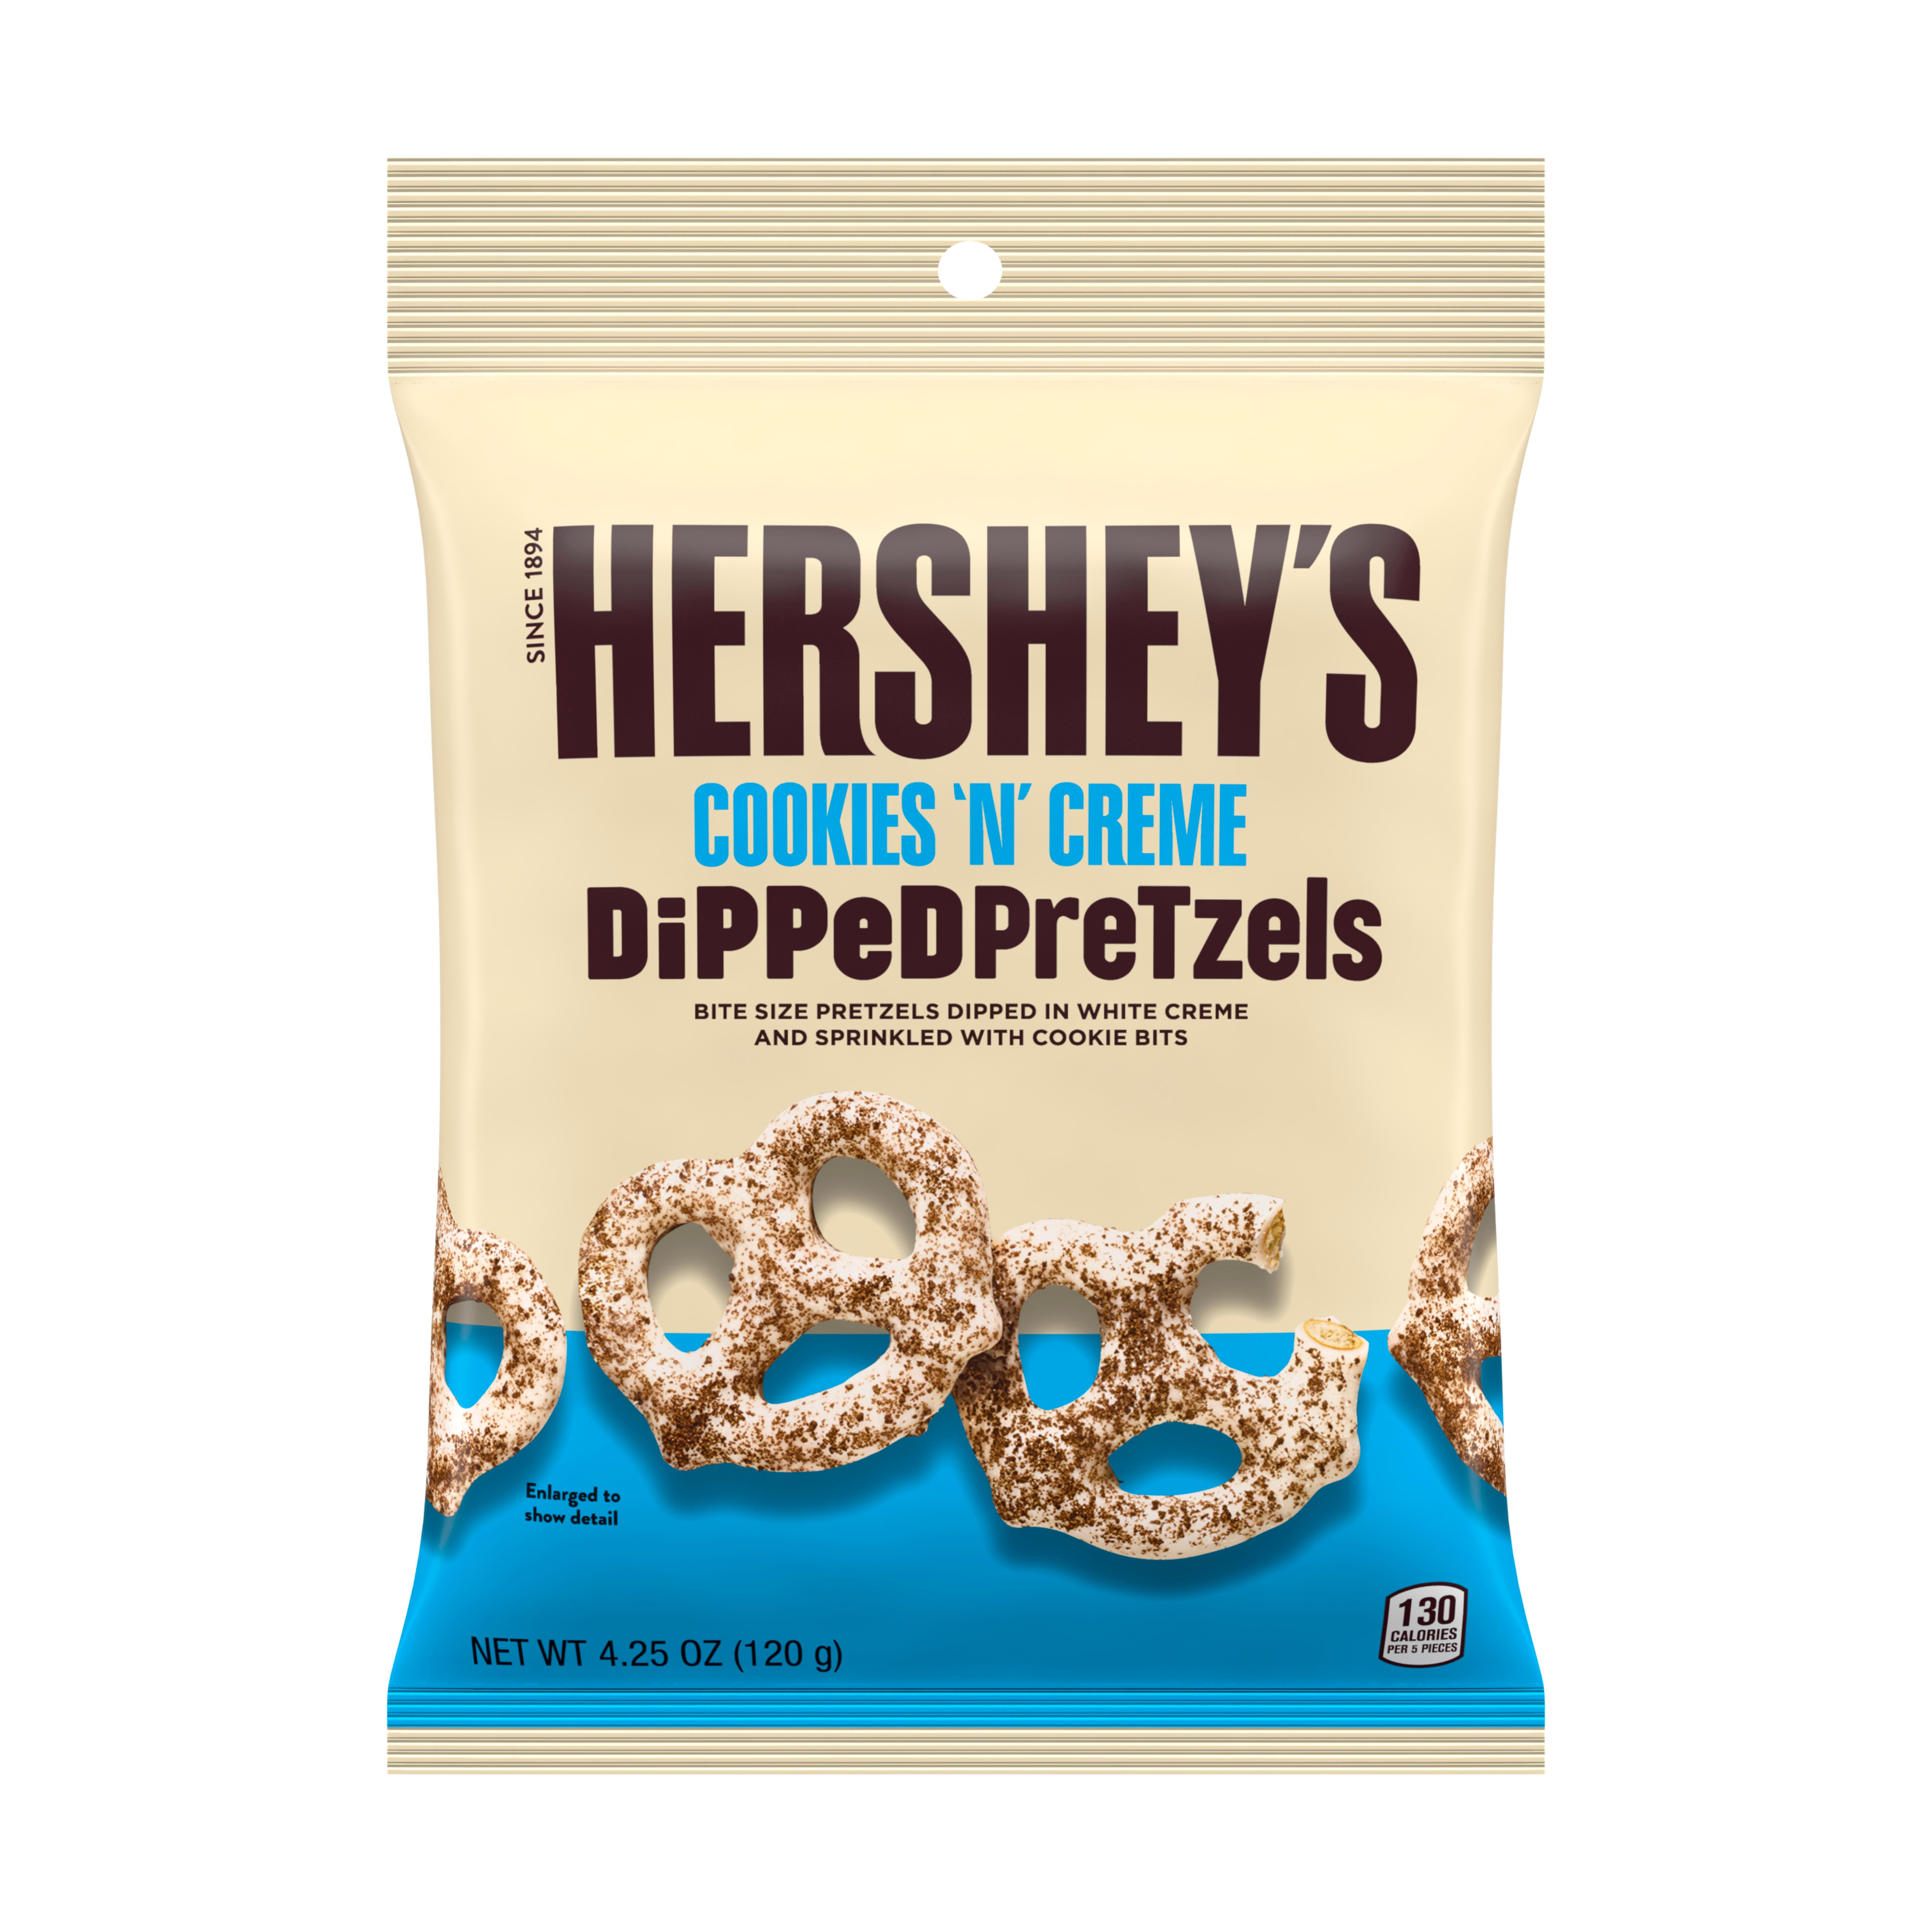 HERSHEY'S Cookies 'n' Creme Dipped Pretzels, 4.25 Oz, 4 Count